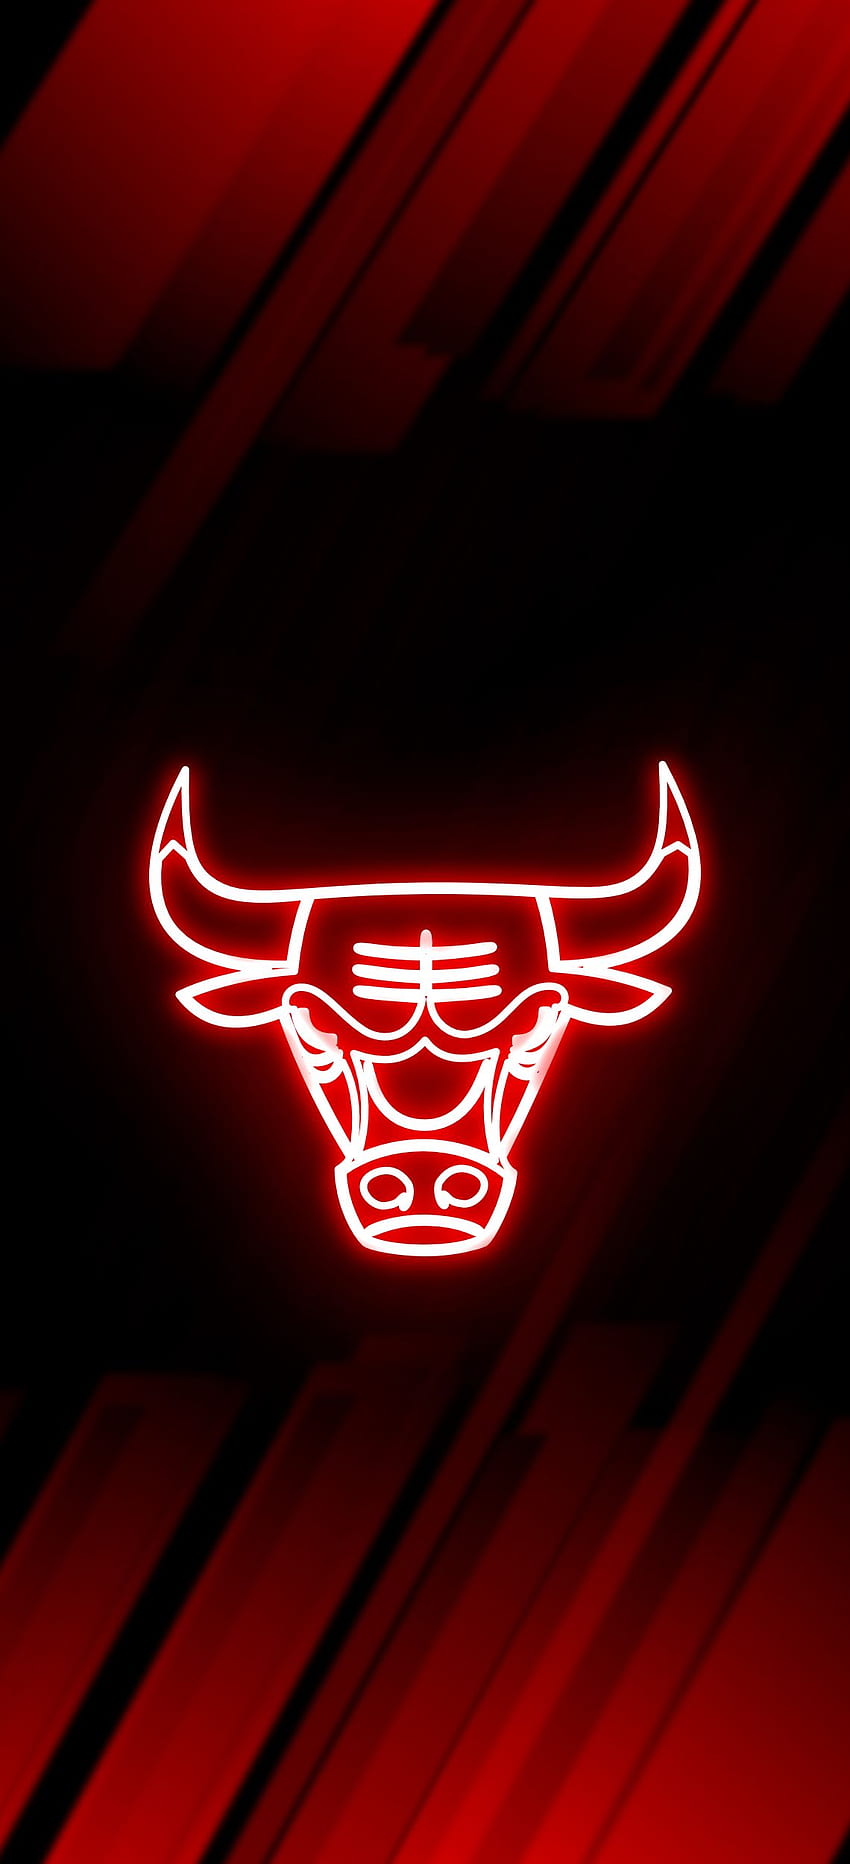 HD wallpaper: Chicago Bulls Logo-Sports Poster Wallpaper, studio shot,  black background